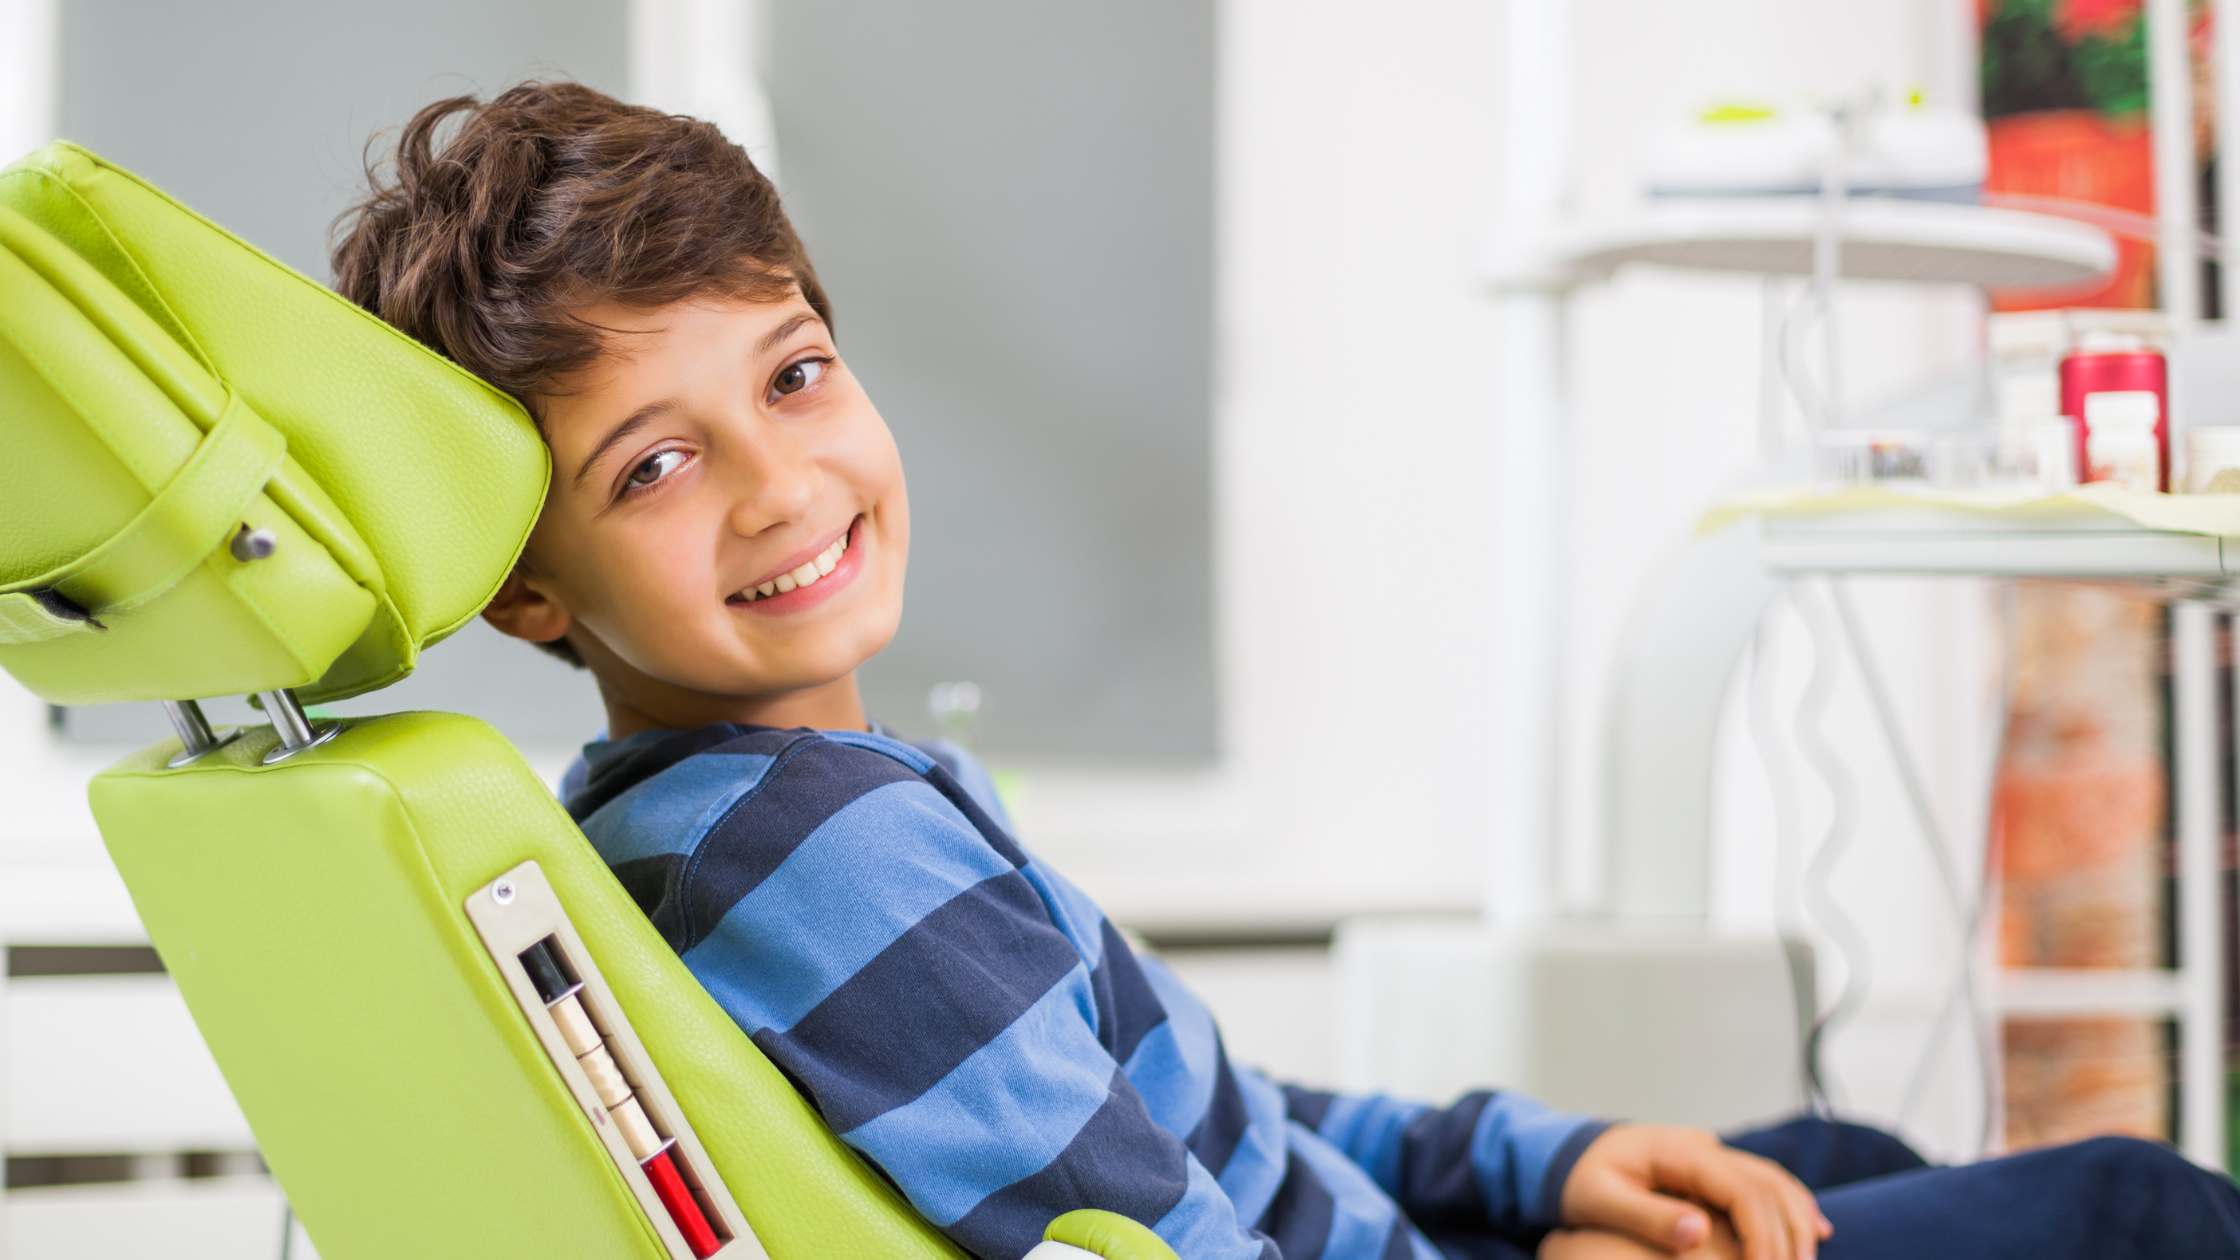 Child in Dental Chair